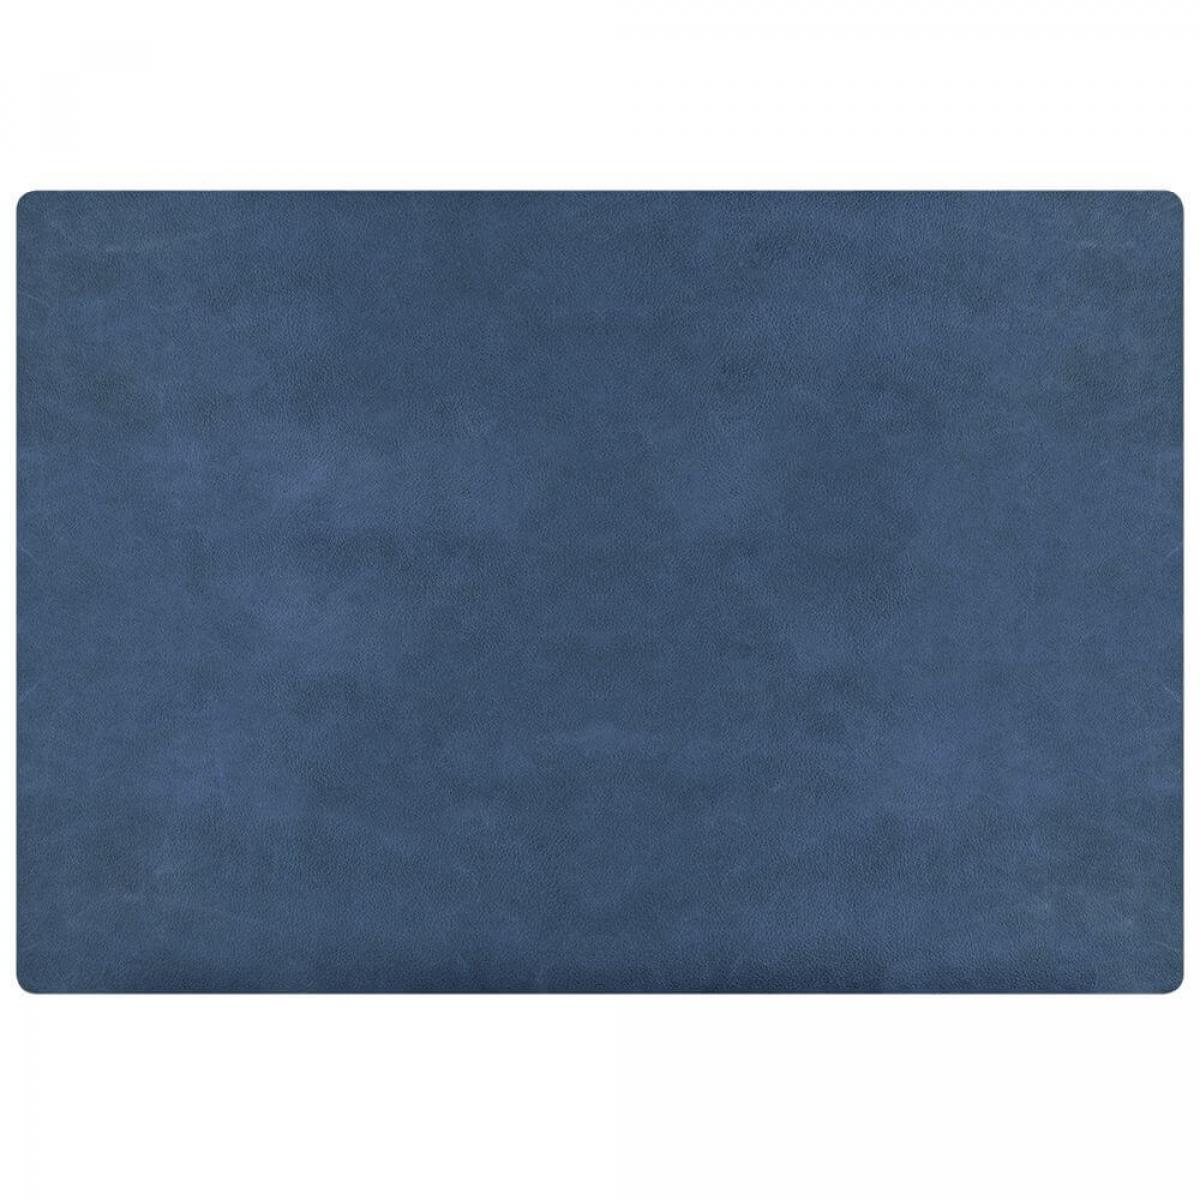 EXNER | Tischset Rusticstyle royal blue (6559630)